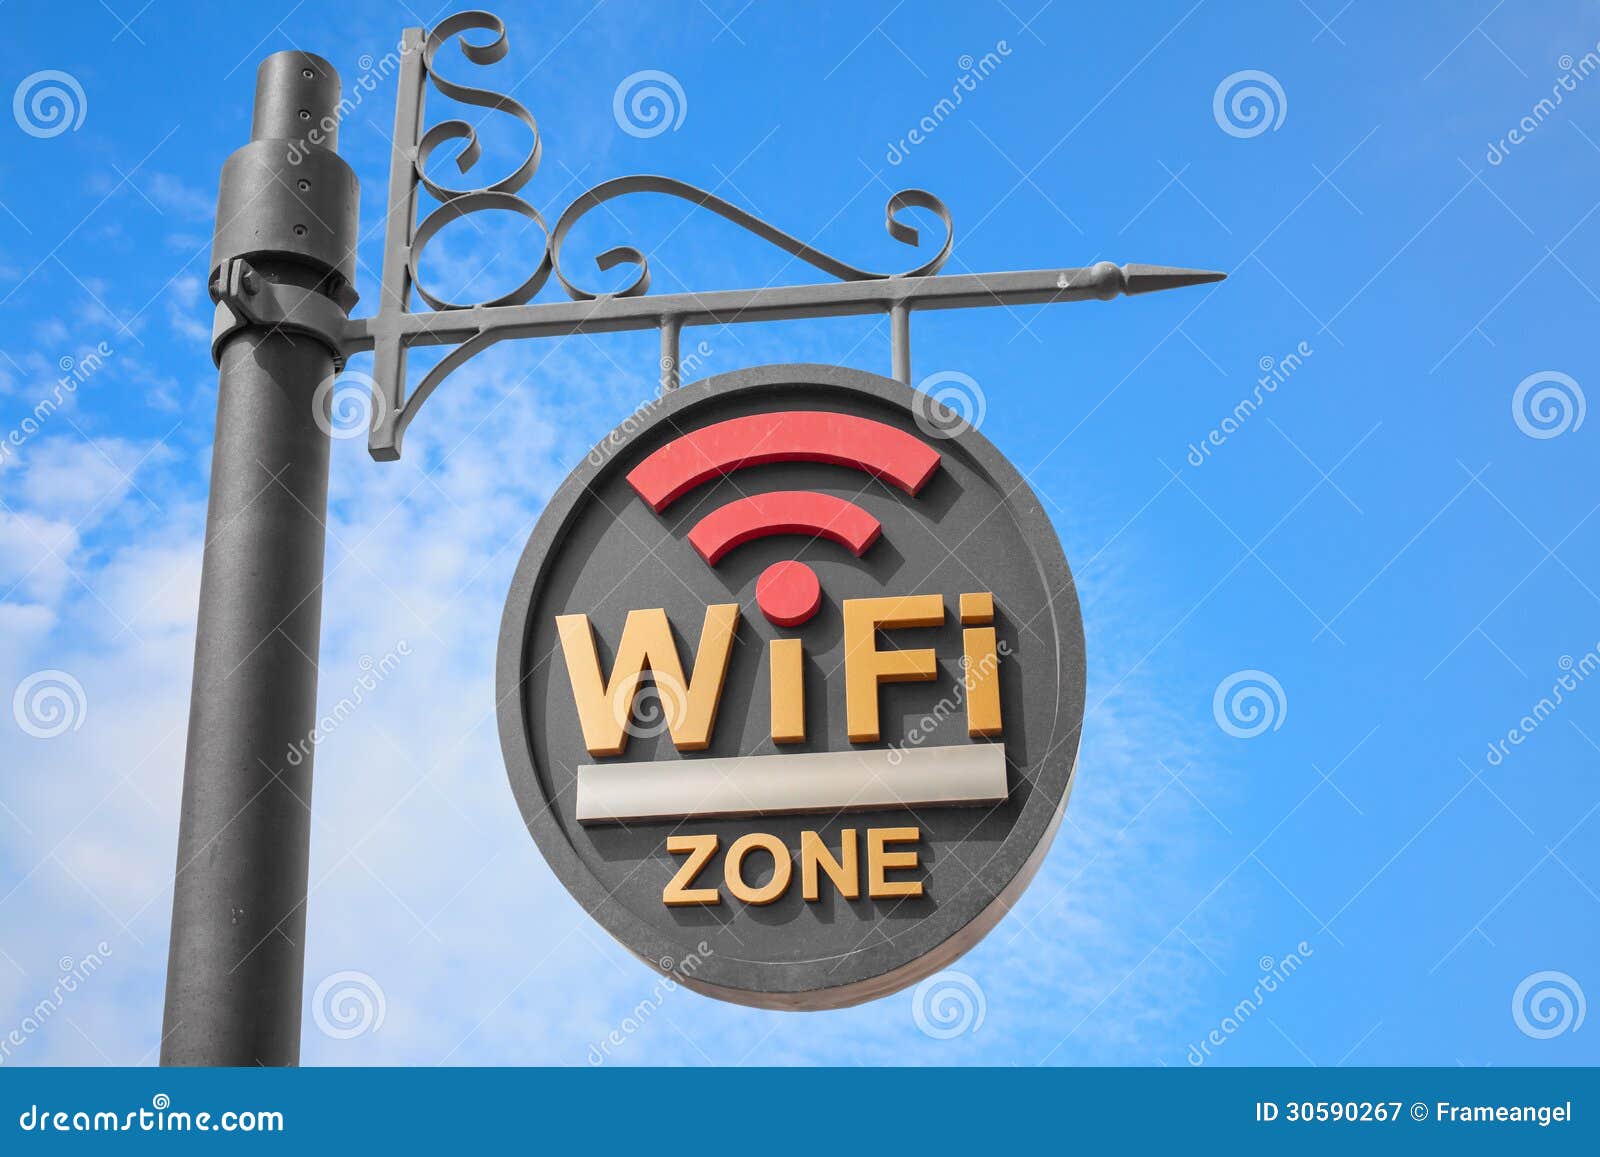 wifi hotspot sign pole